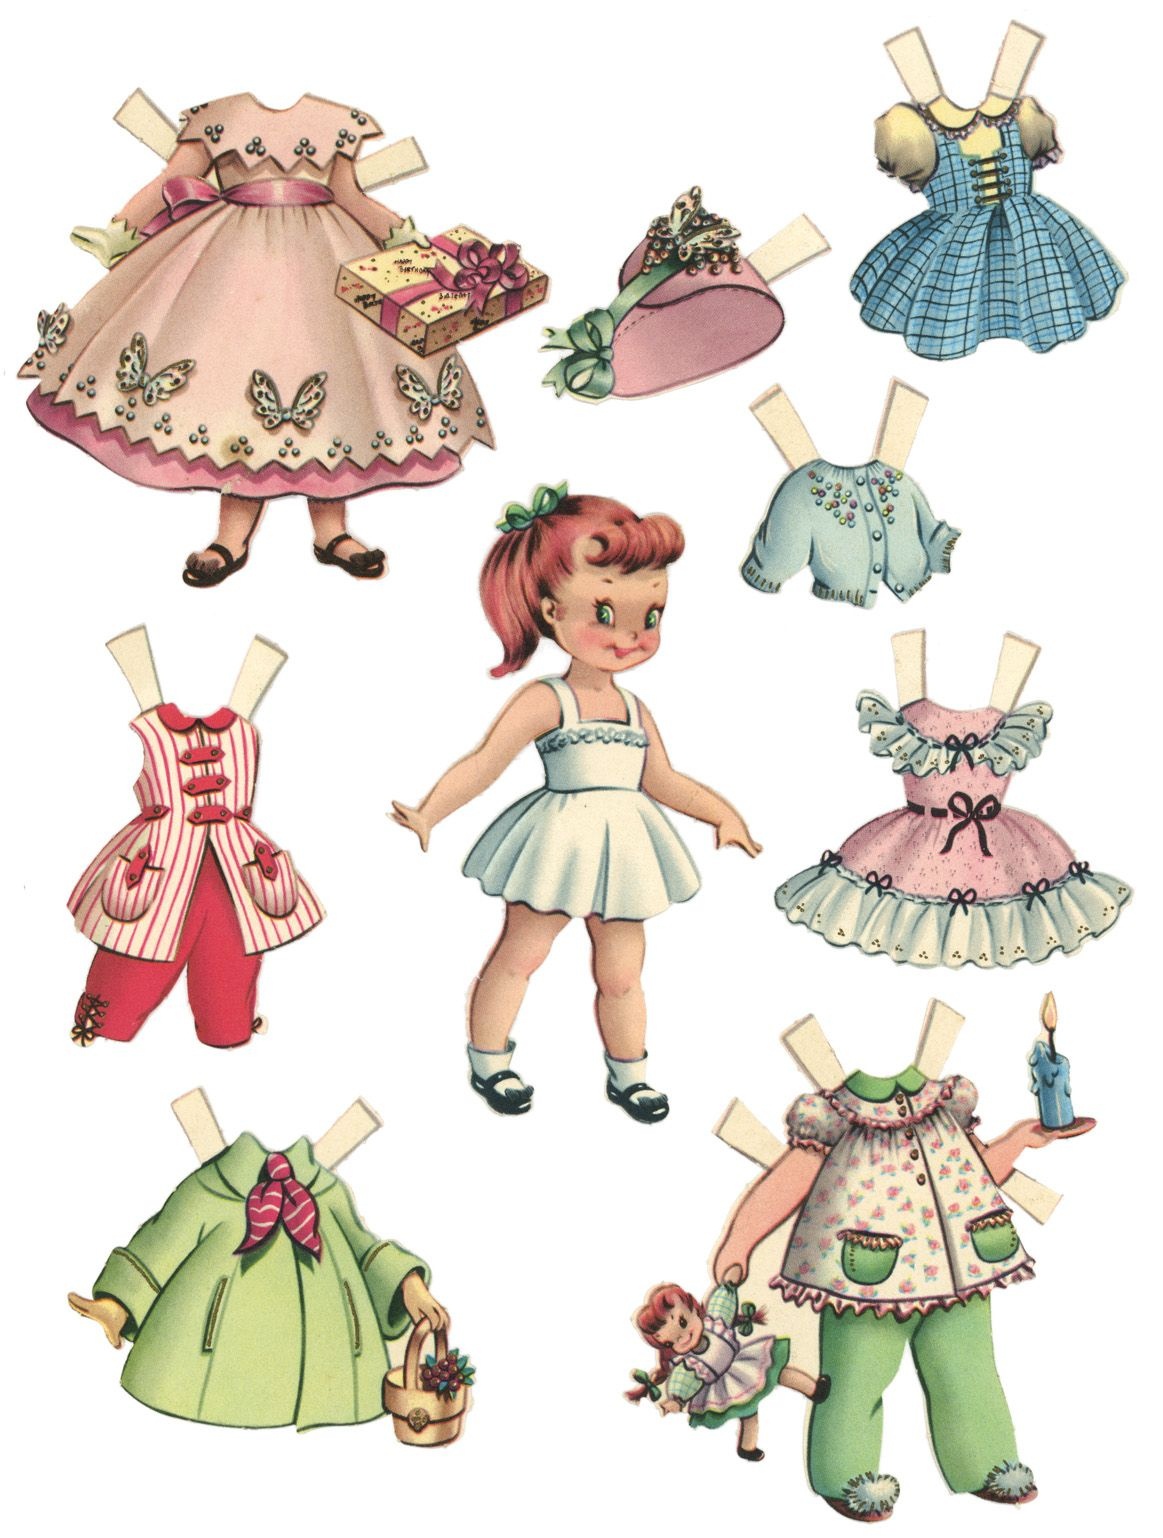 10 Free Printable Paper Dolls Sets !! | Grandparent World | Paper - Free Printable Paper Dolls From Around The World